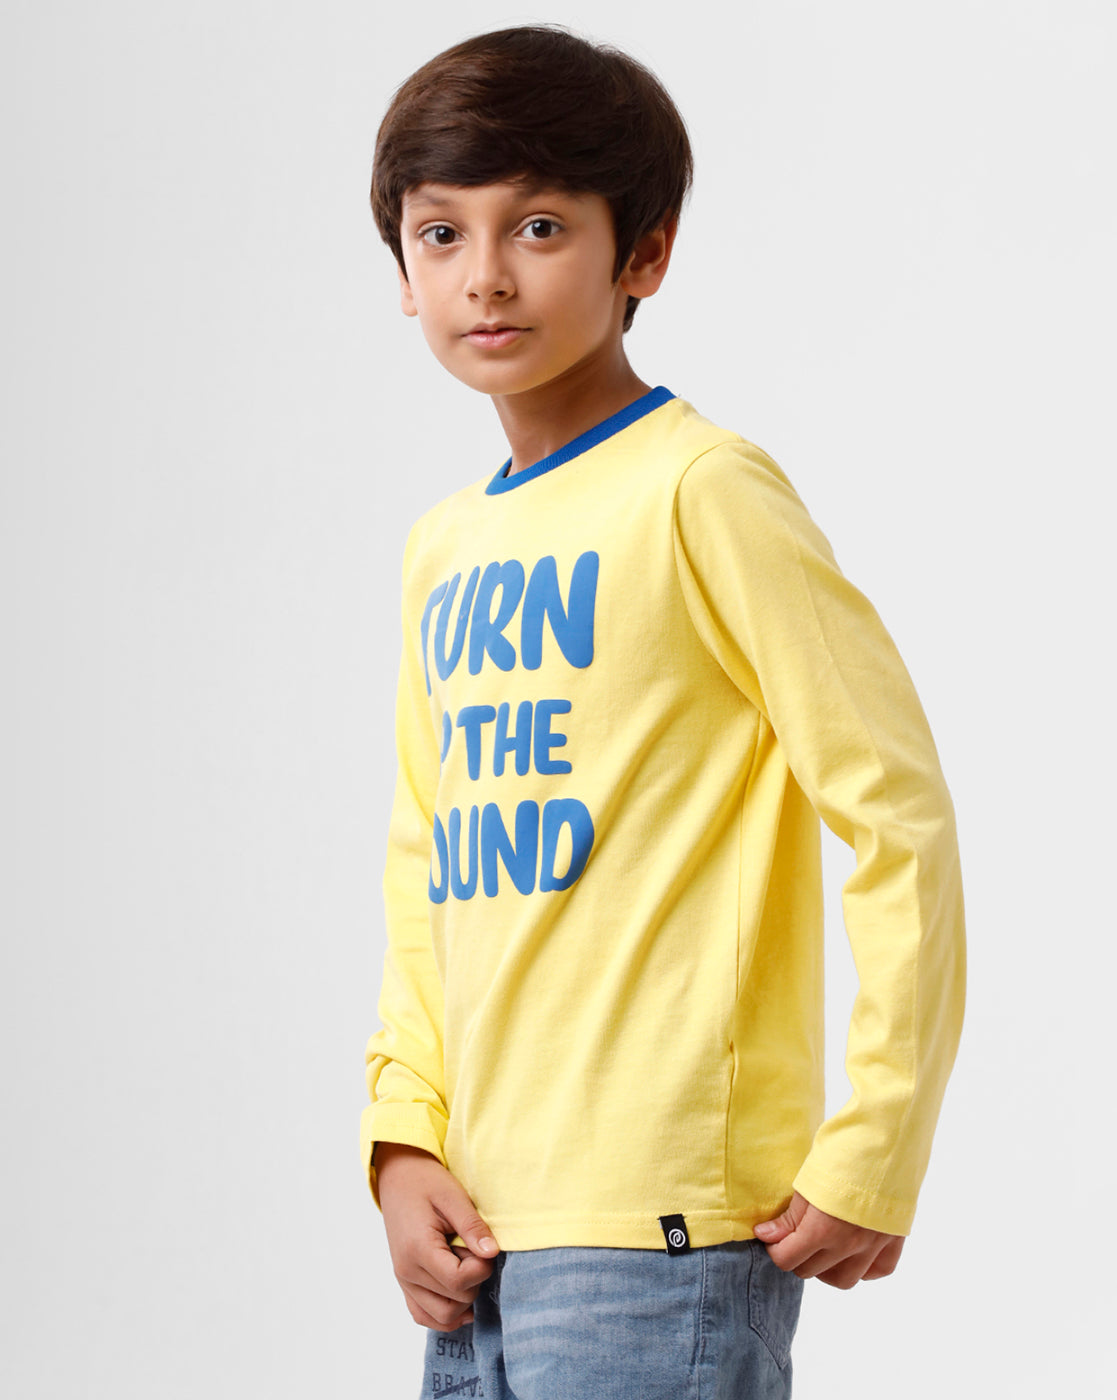 Kids - Boys Printed Full Sleeve T-Shirt Yellow Tail